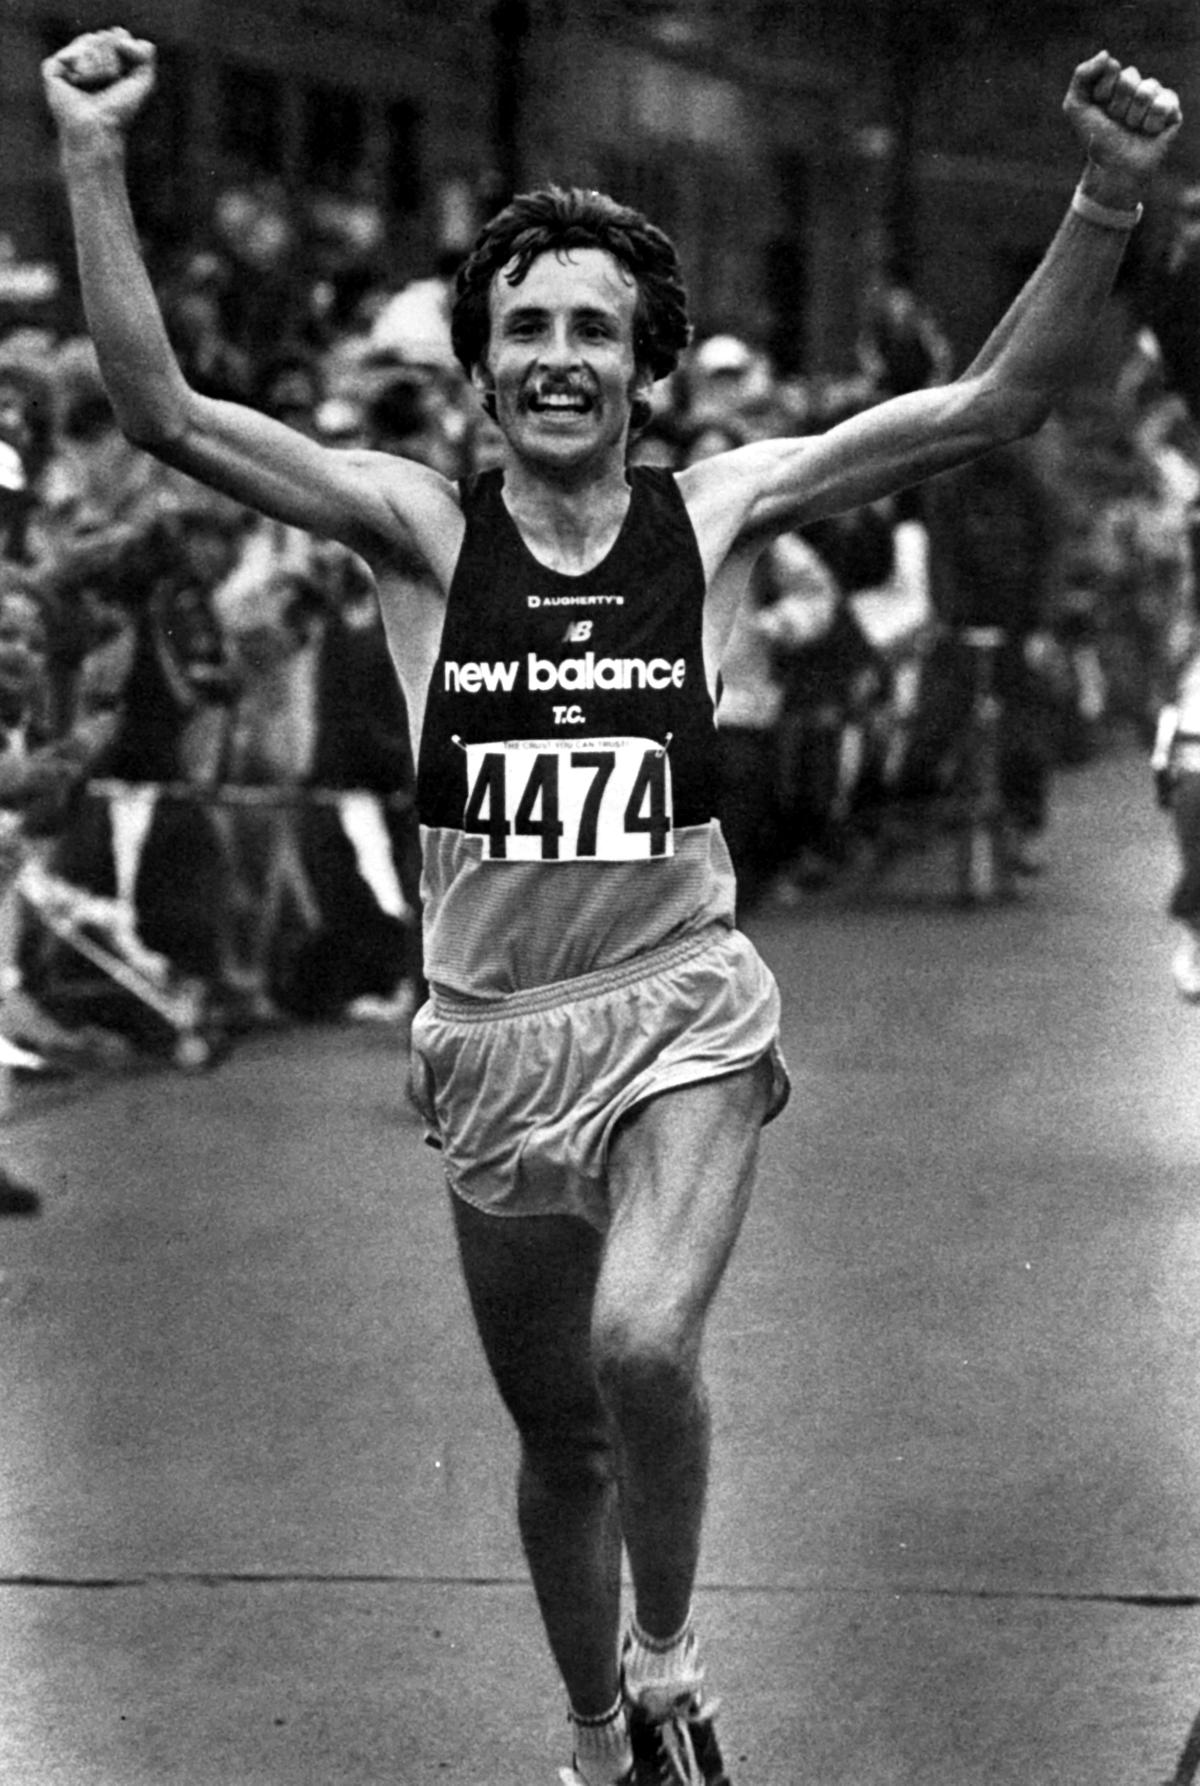 Dick Beardsley celebrating his run. (Courtesy of <a href="https://www.facebook.com/profile.php?id=100063608980752">Dick Beardsley</a>)